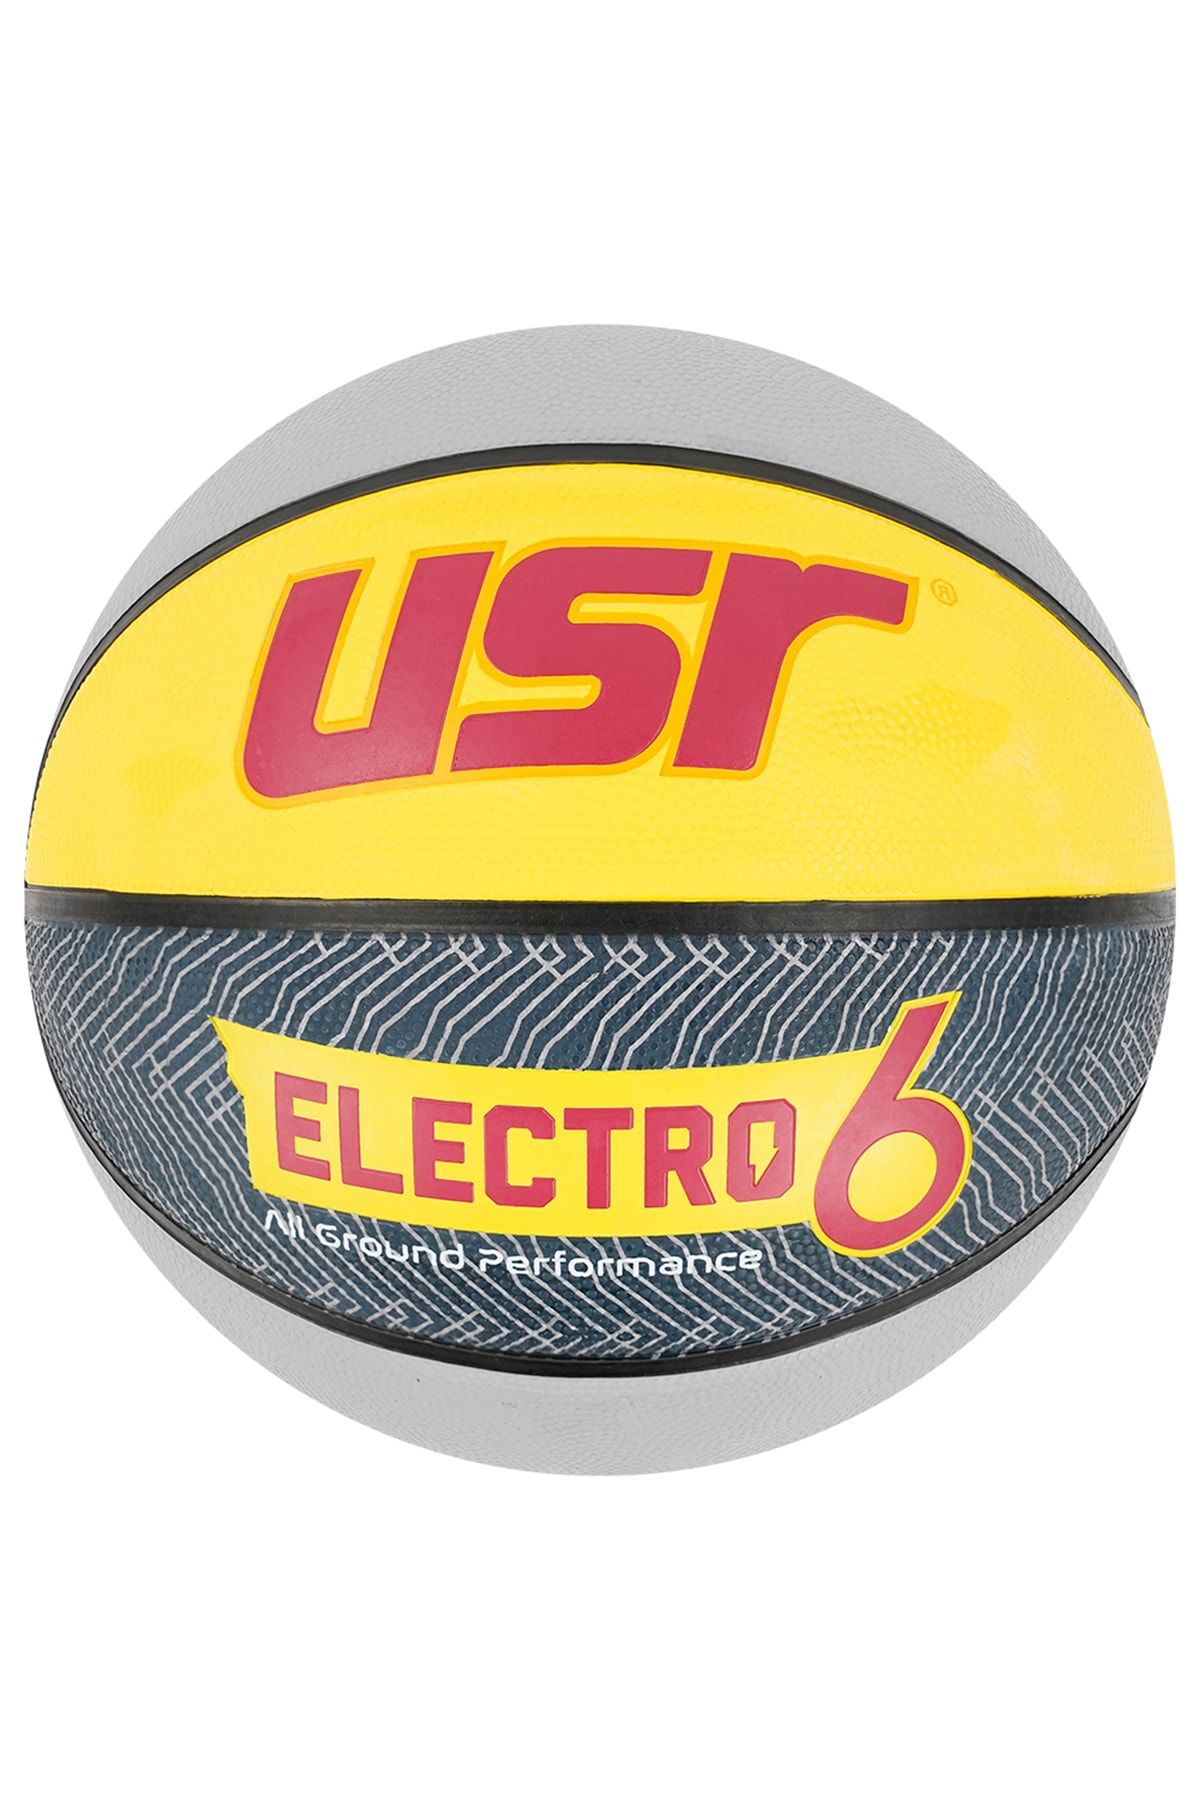 Usr Electro6.2 Kauçuk 6 No Basketbol Topu